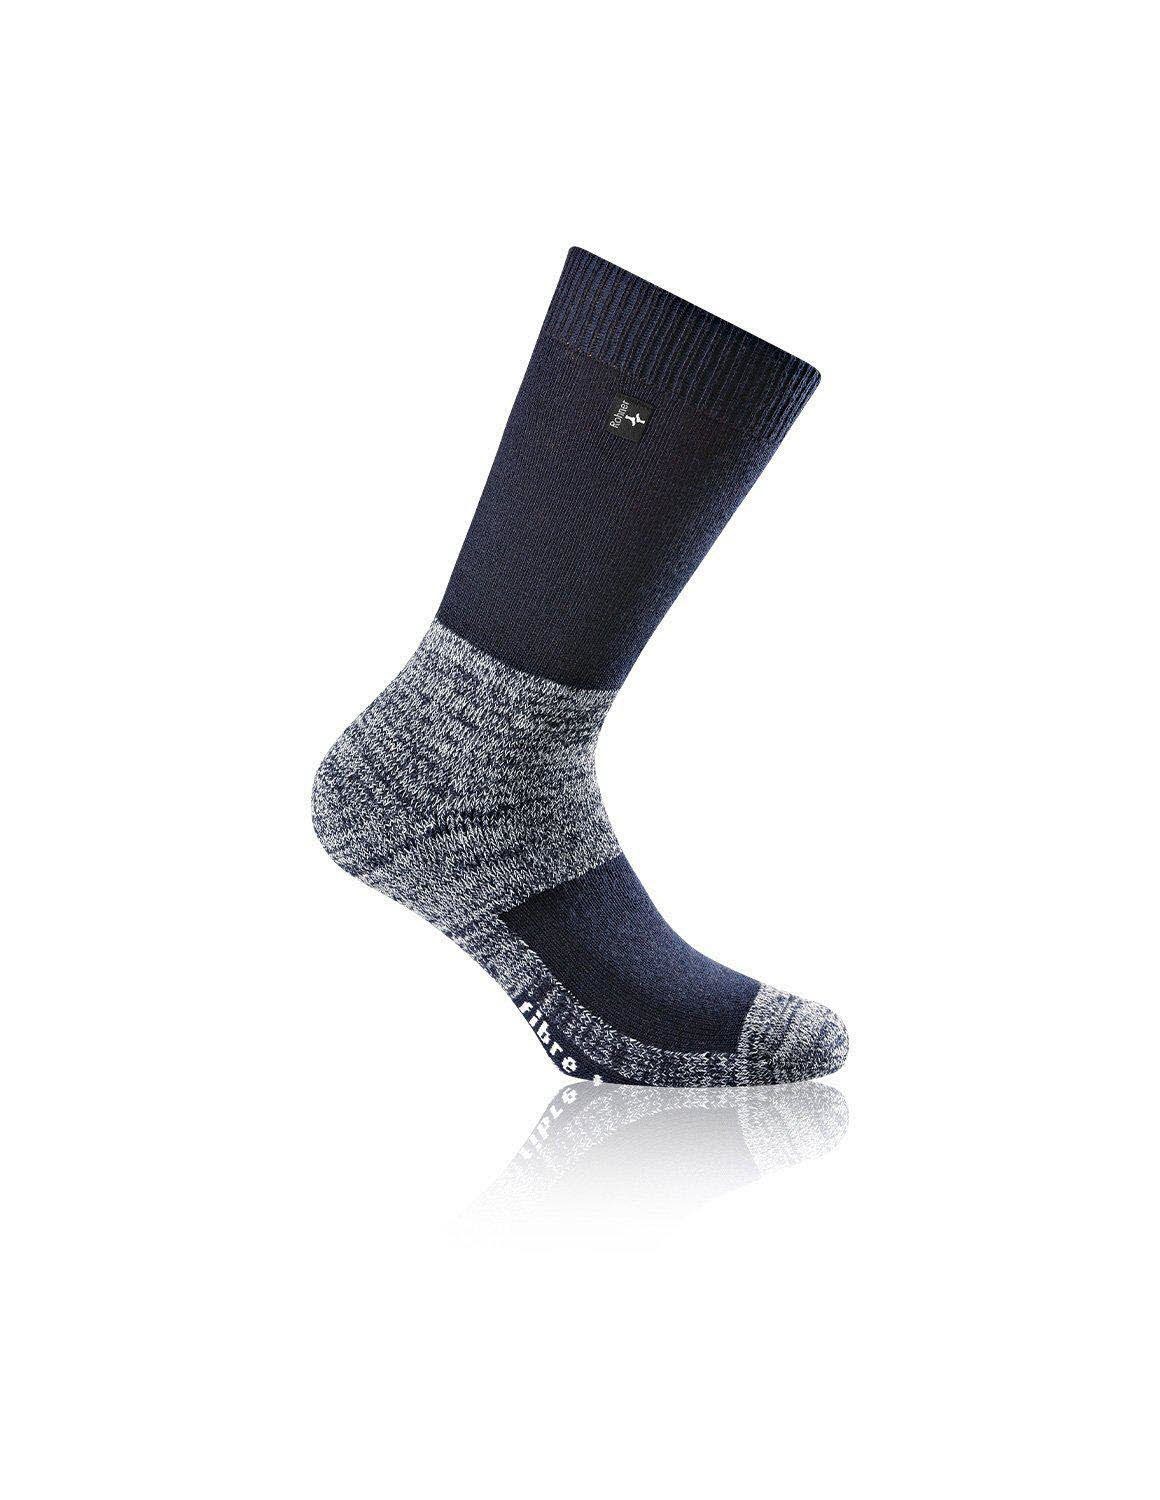 [Empfohlene Sonderfunktion] Rohner Socks Stulpensocken fibre marine tech